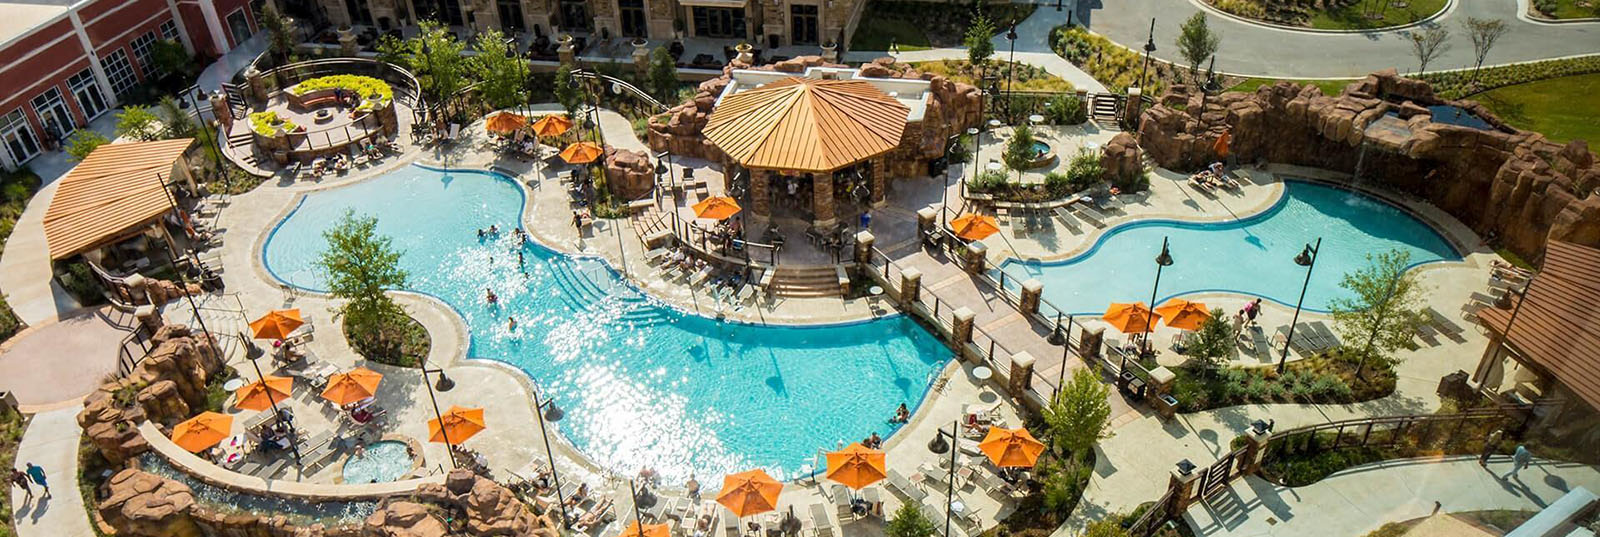 Winstar Resort and Casino pool